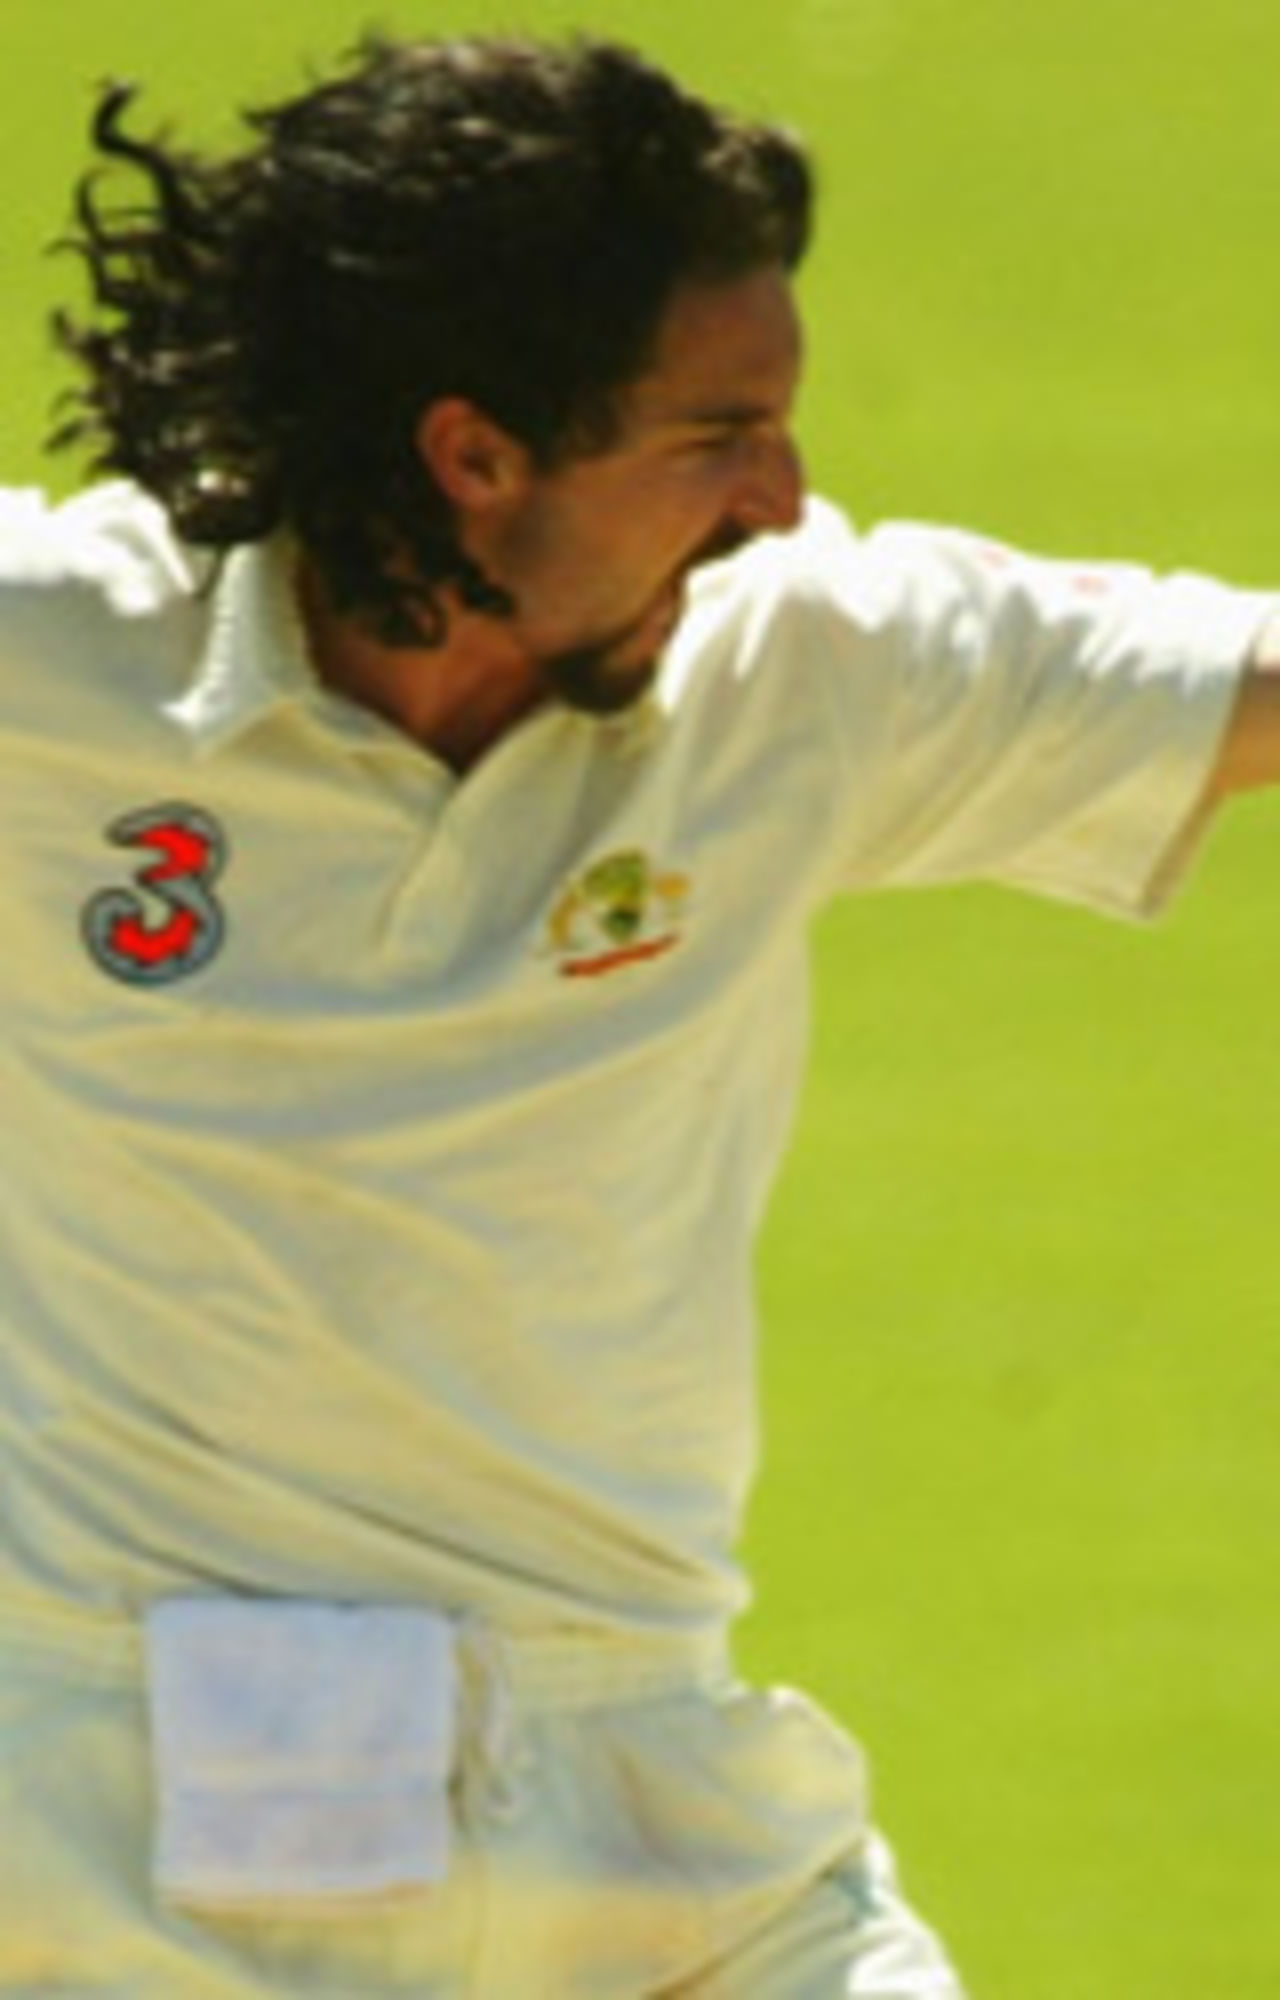 Jason Gillespie celebrates after trapping Akash Chopra leg before, Australia v India, 2nd Test, Adelaide, 5th day, Dec 15, 2003